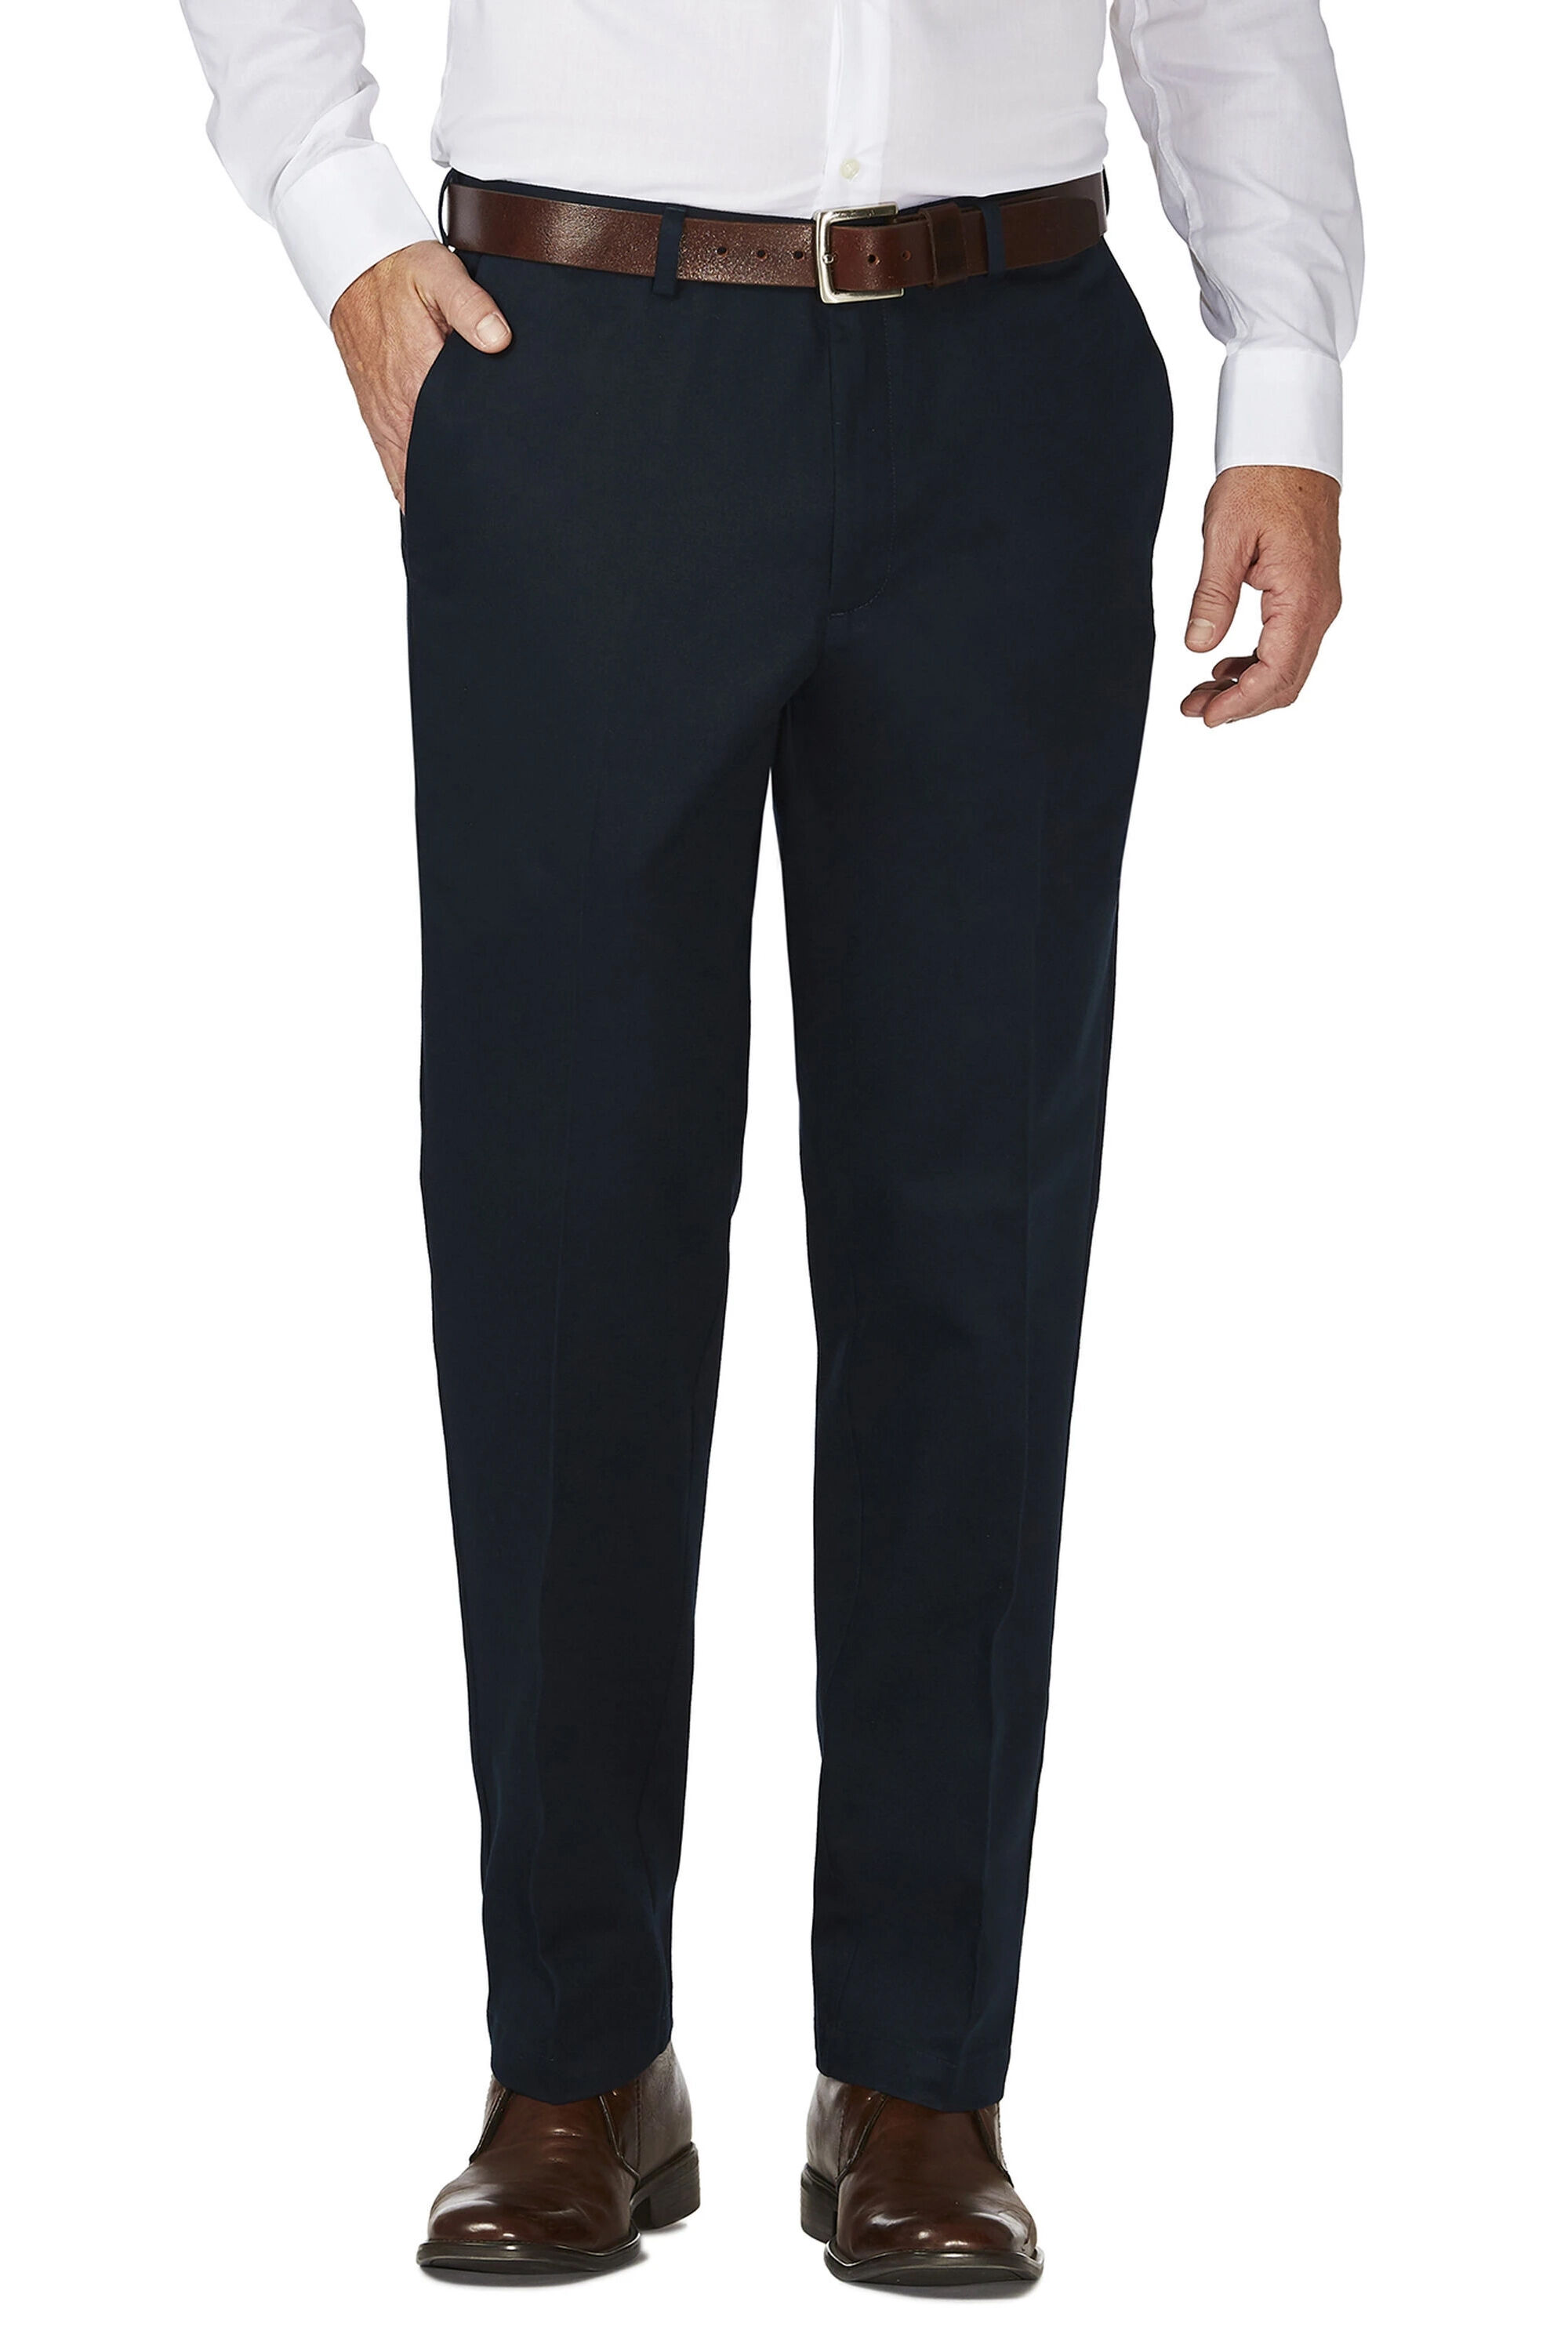 Riglozi 4 Way Plain Strachable Trouser for MenTrack PentRegular Fit  PentStretchable PentJean PentCotton PentMens Pent